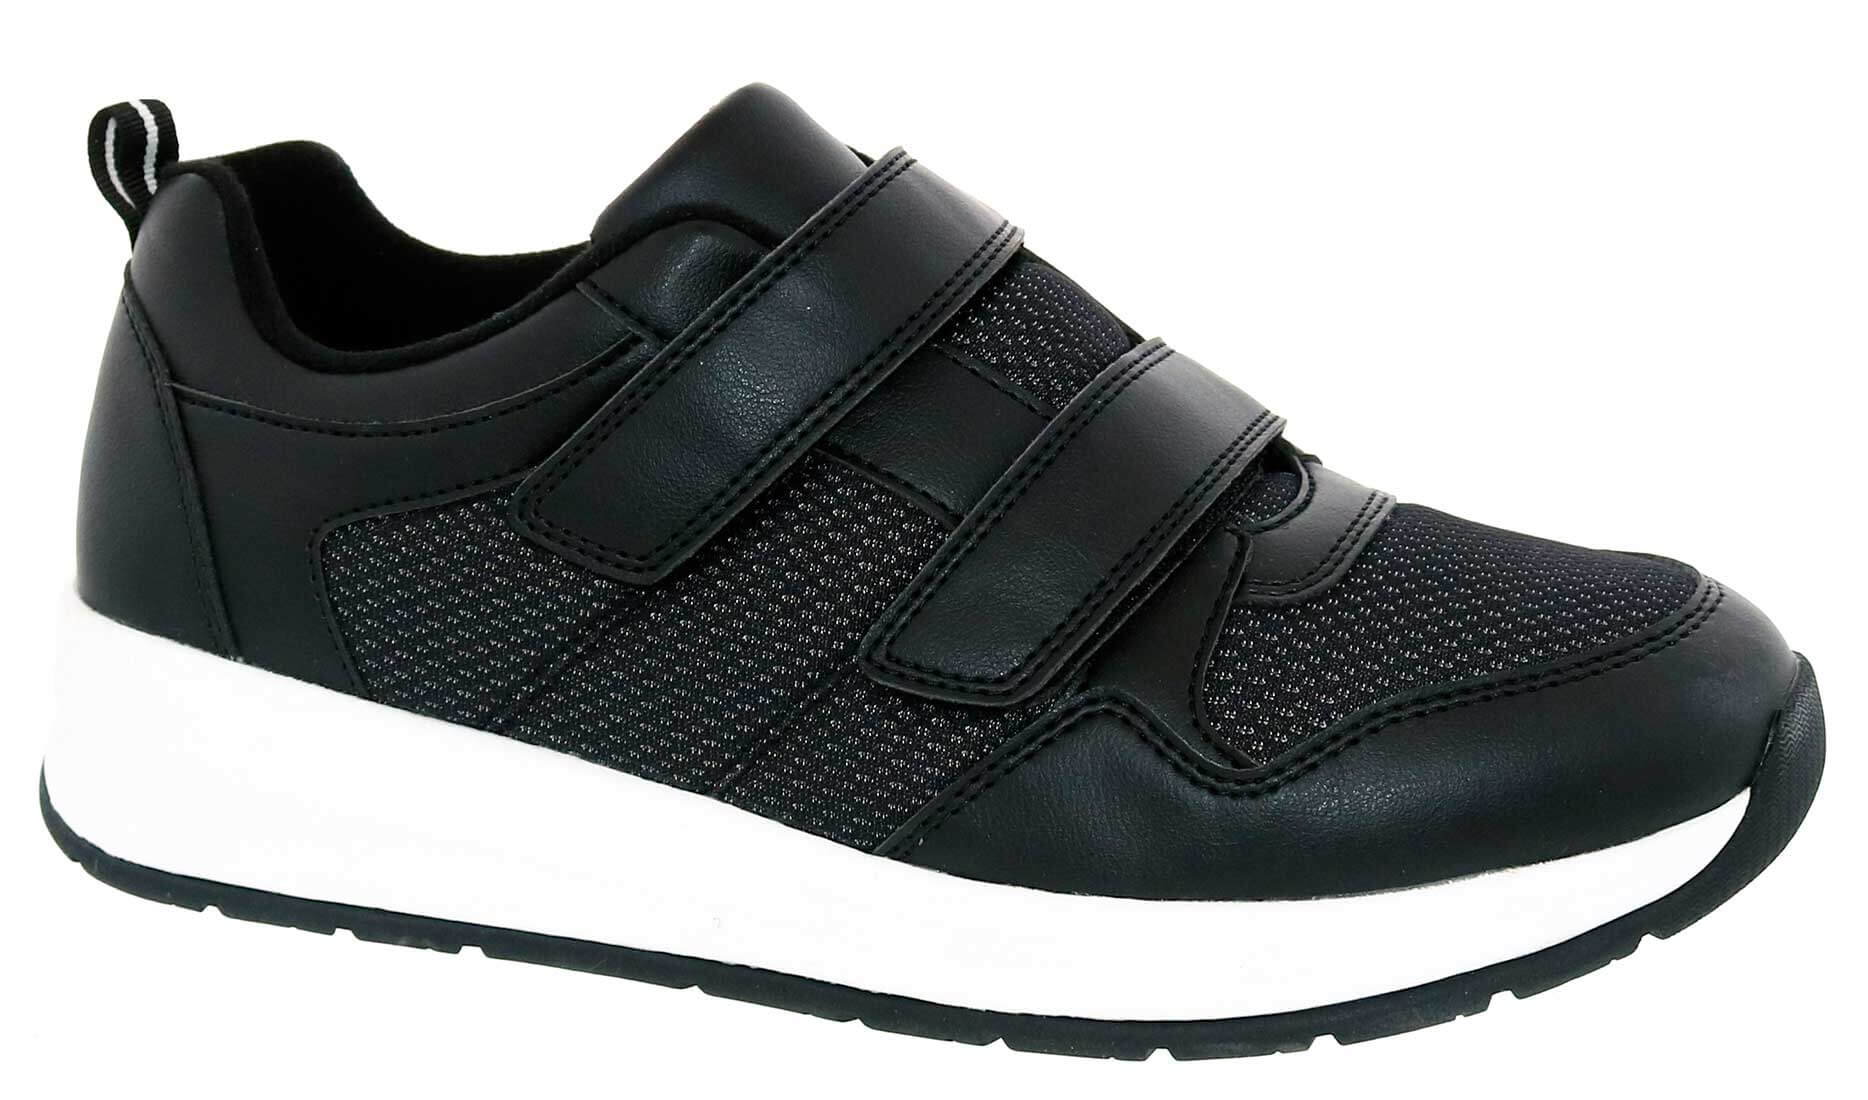 Footsaver Shoes Bunco 94991 - Men's Casual Comfort Therapeutic Diabetic Shoe - Extra Depth For Orthotics